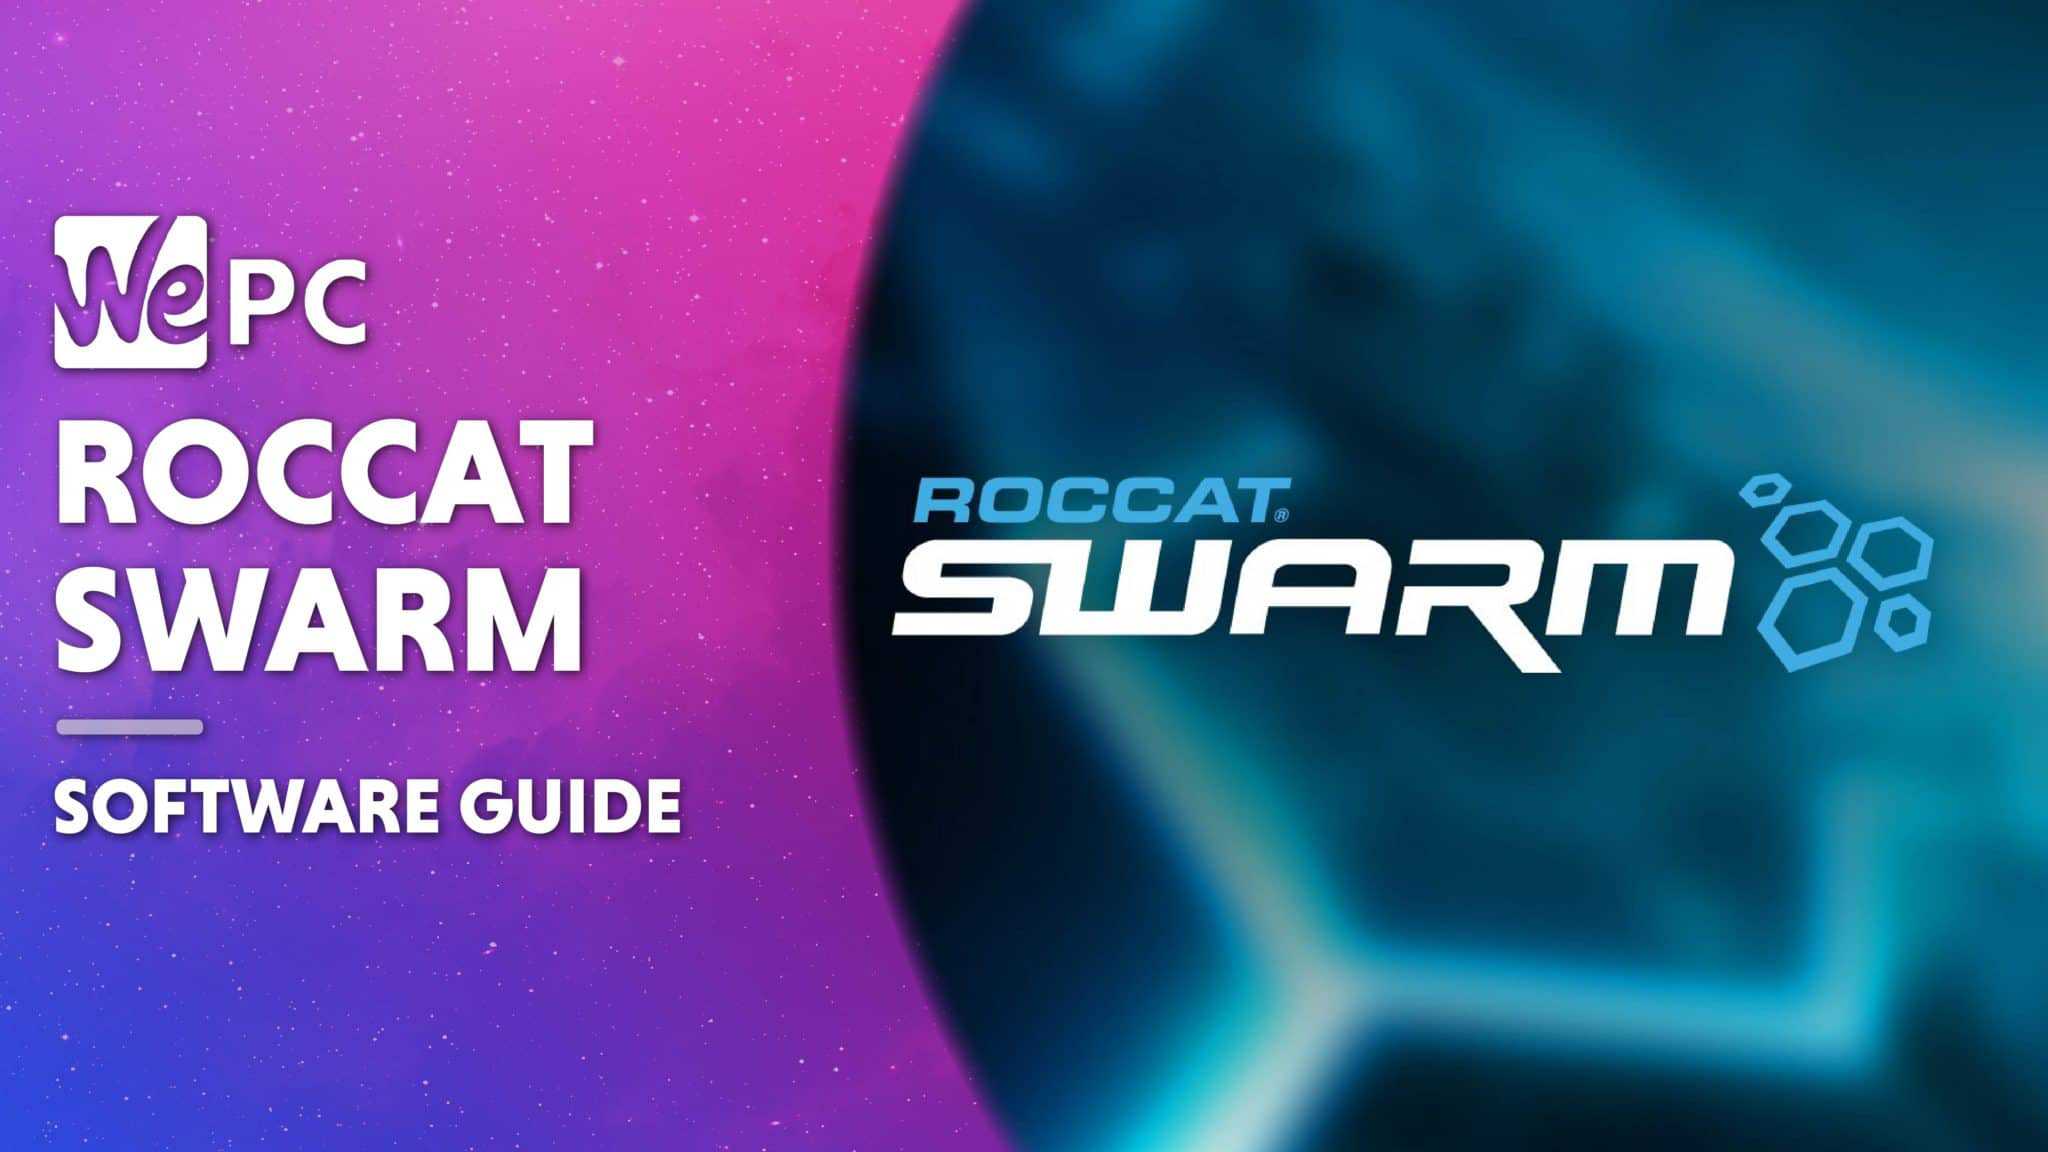 WEPC Roccat swarm software guide 01